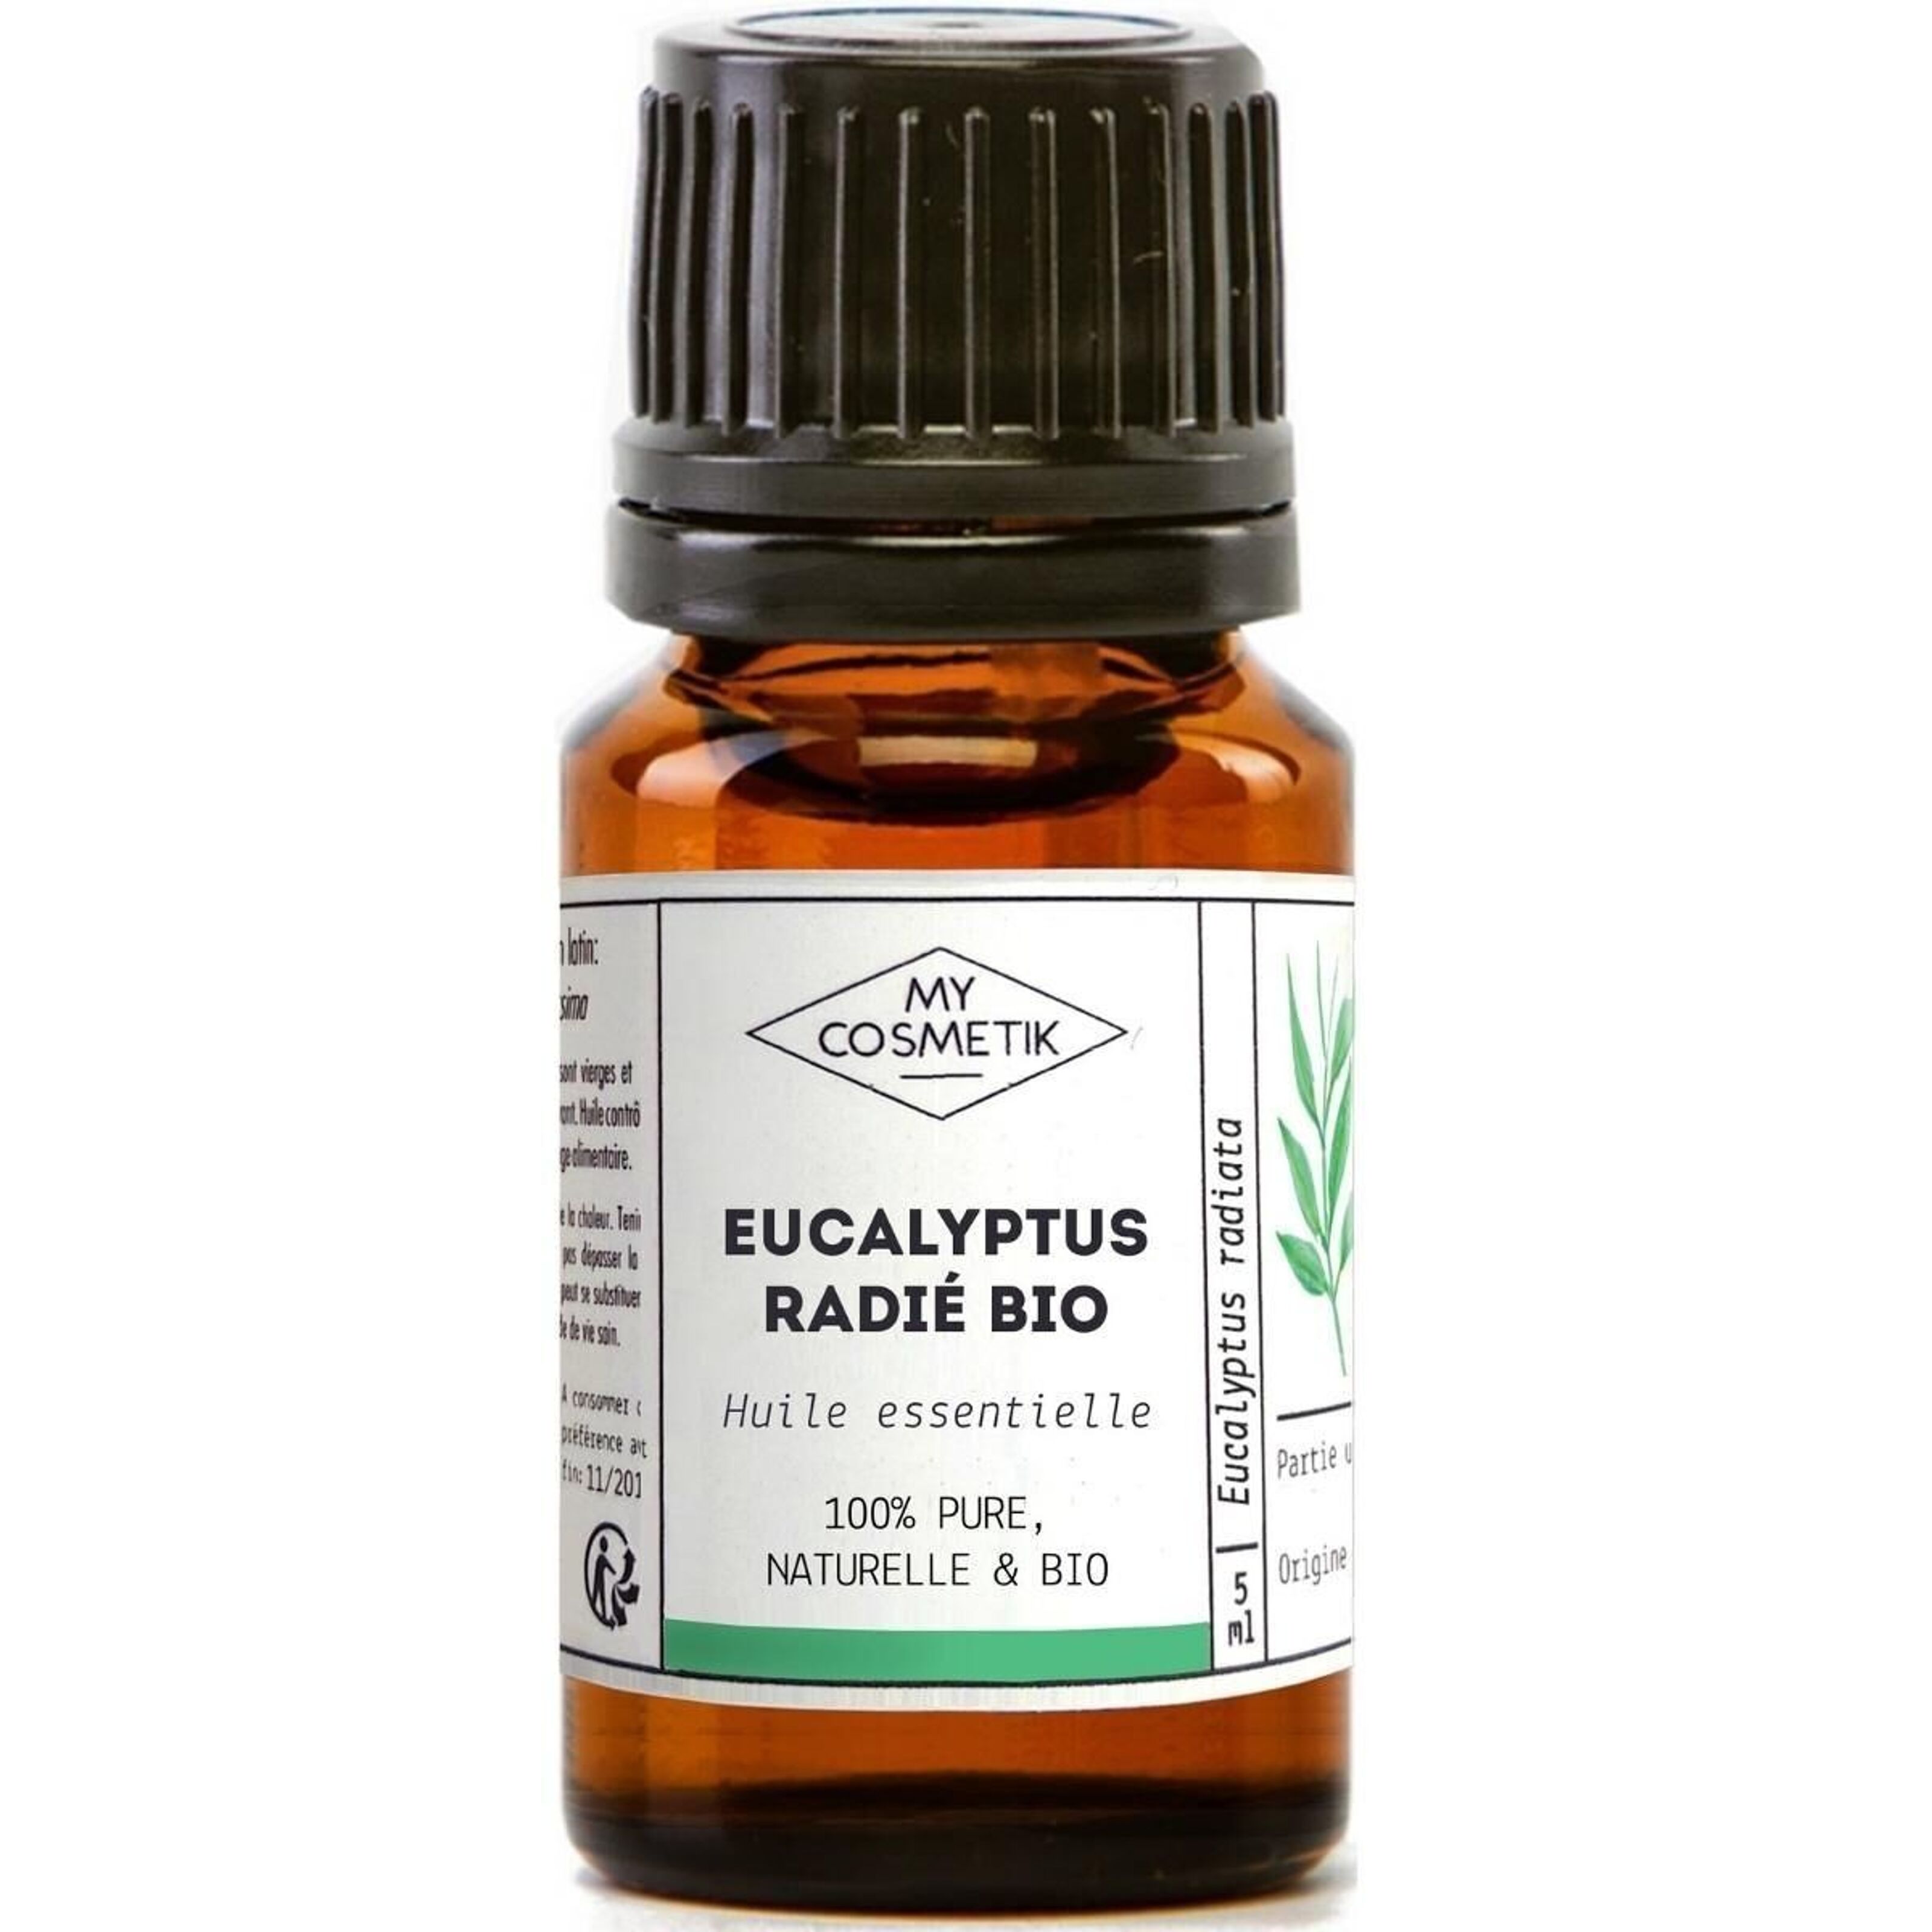 EUCALYPTUS RADIE BIO (AB) - HUILE ESSENTIELLE 10 ML - Eucalyptus Radiata